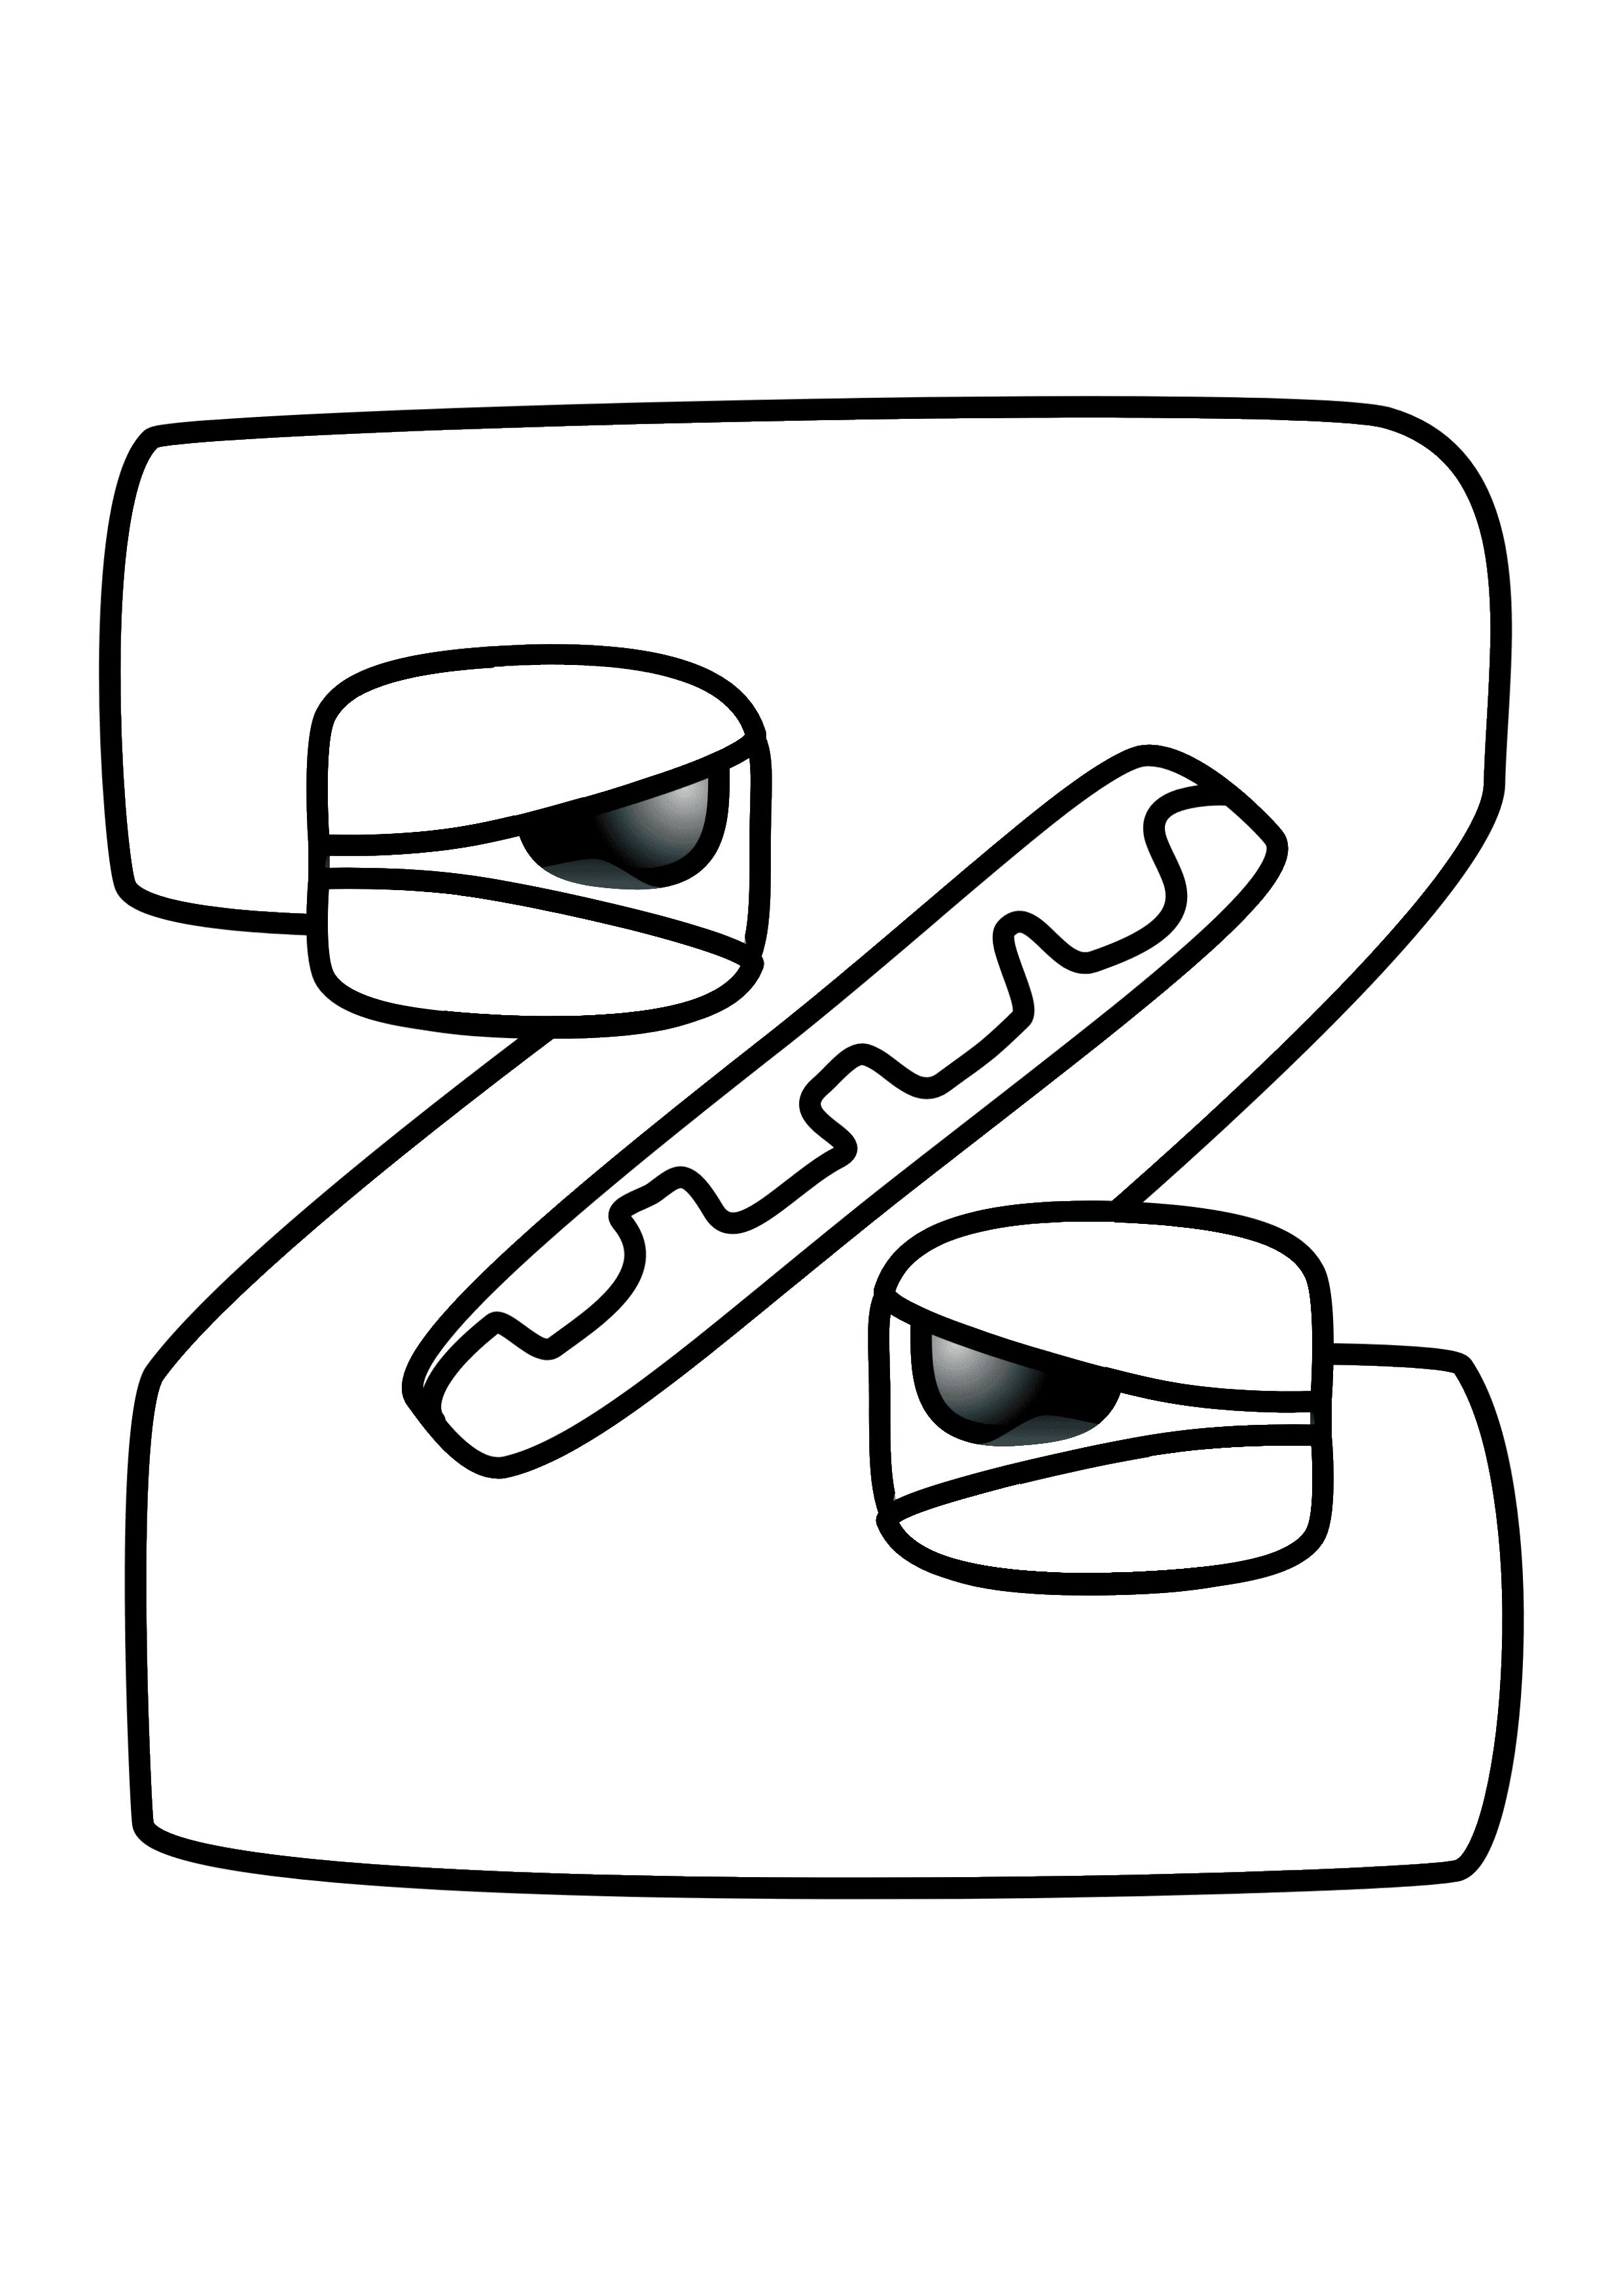 Буква Z из алфавита лор